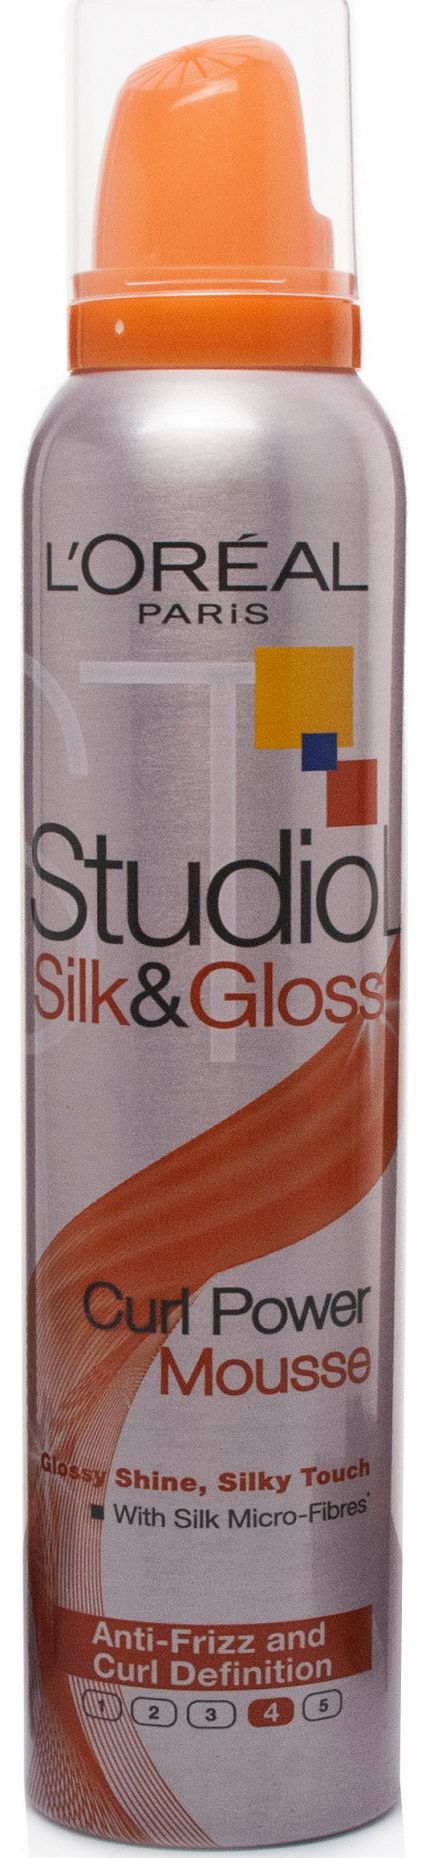 L'Oreal Studio Line Silk Gloss Curl Mousse